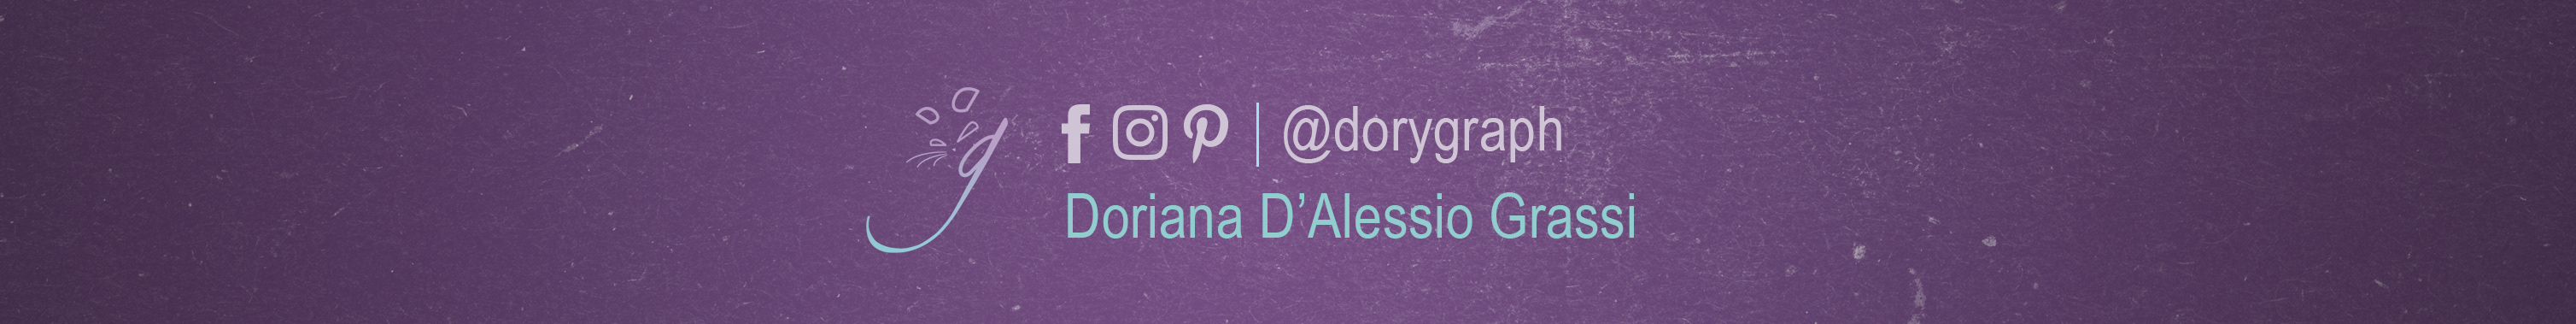 Profil-Banner von Doriana D'Alessio Grassi